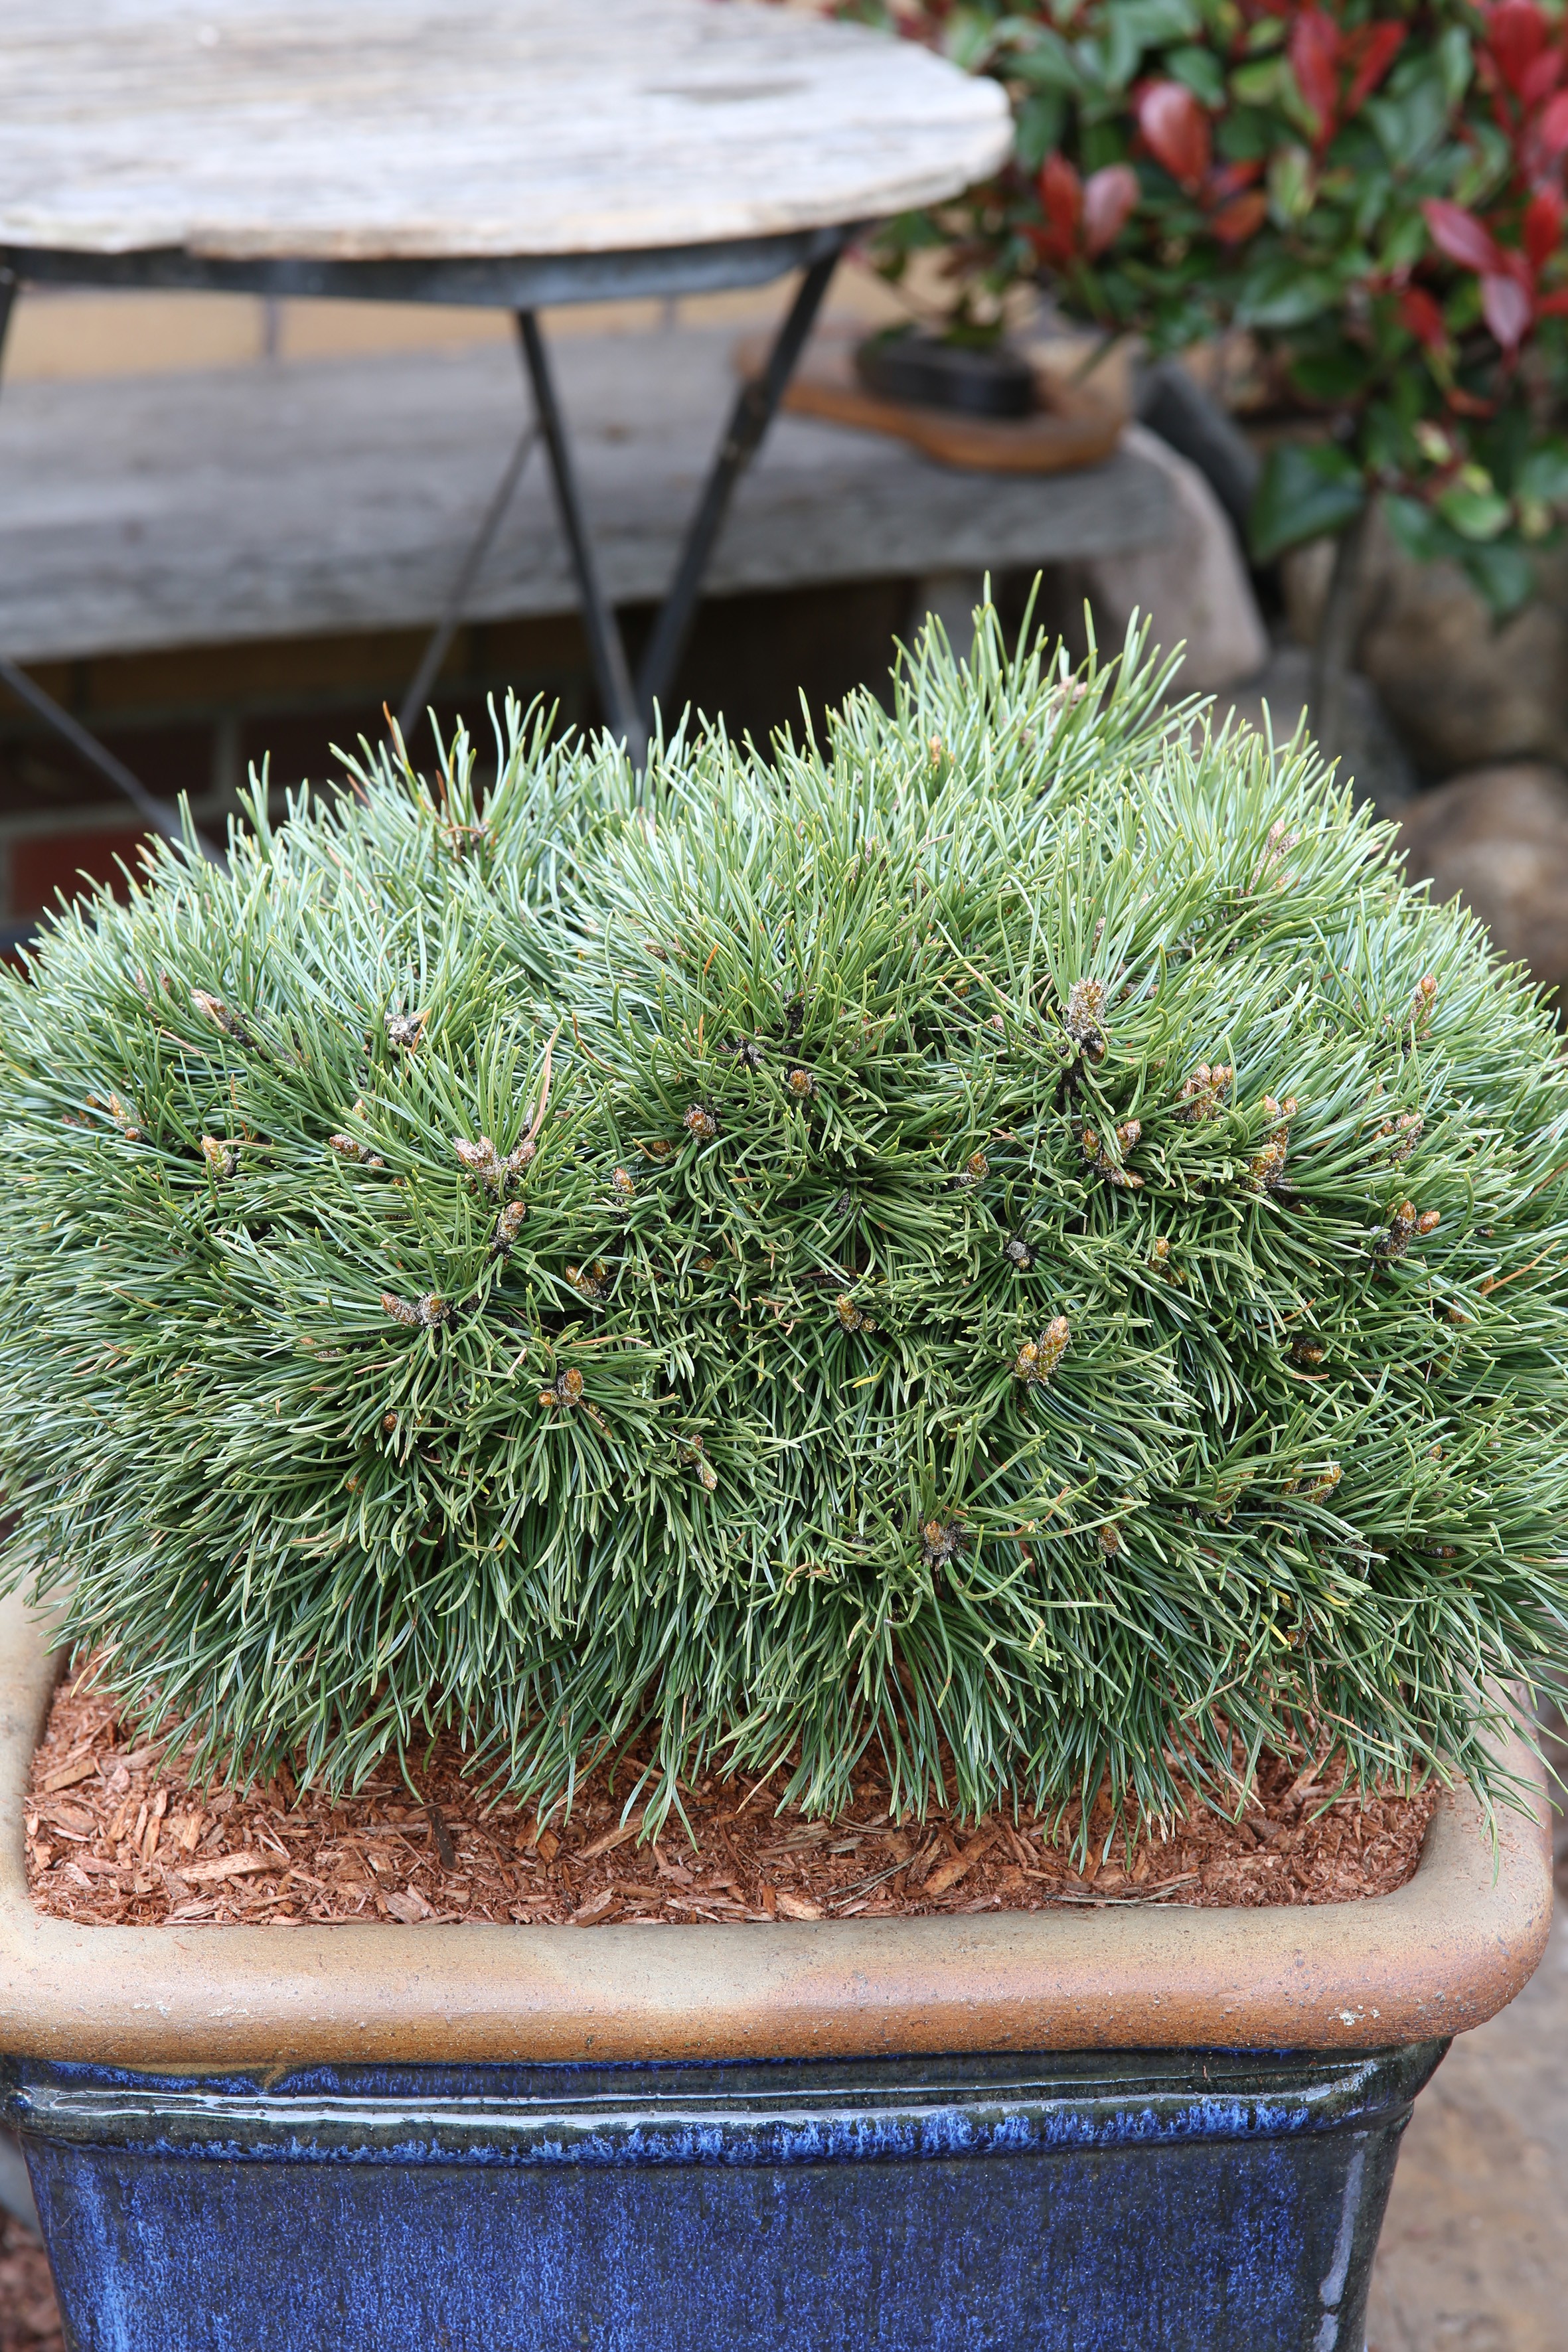 Pinus uncinata 'Grüne Welle'